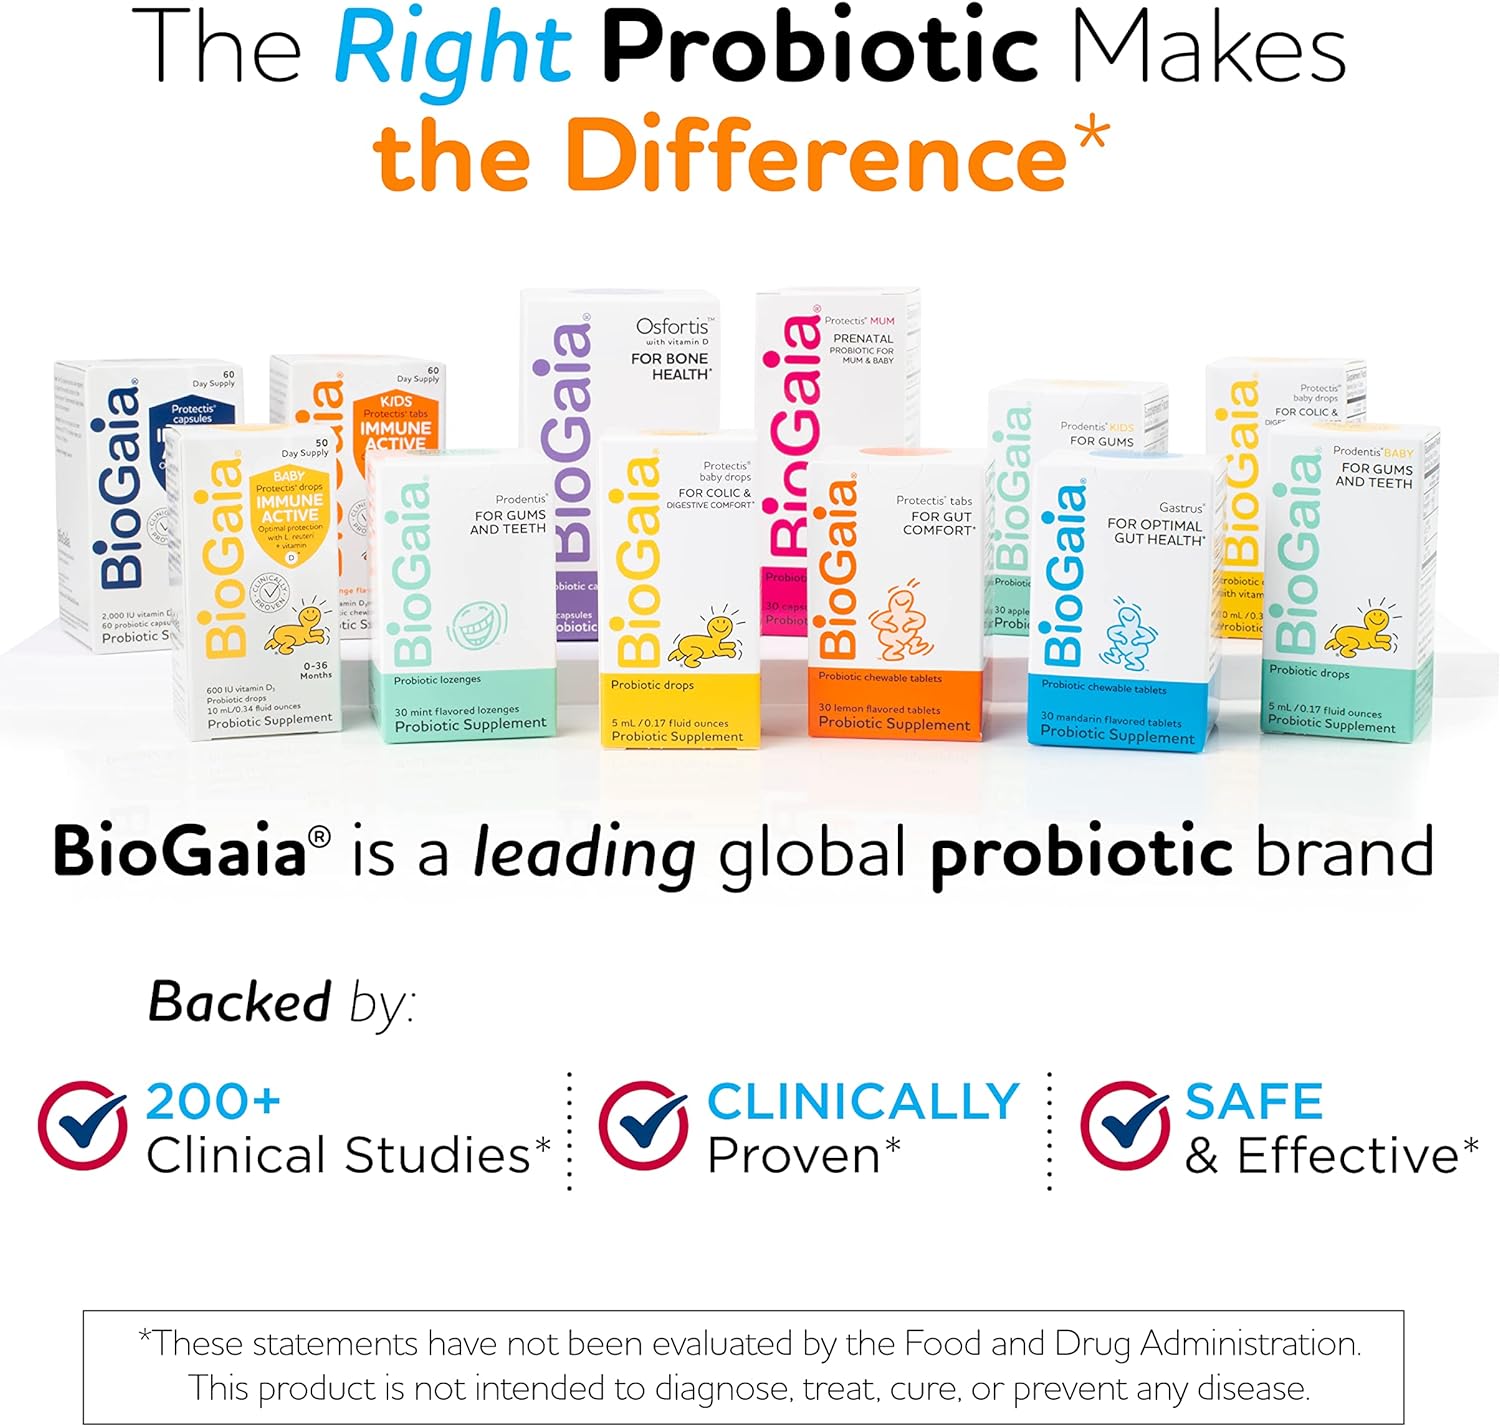 BioGaia Protectis Immune Active Baby | Probiotic + Vitamin D | 50 Day Supply - Medaid - Lebanon